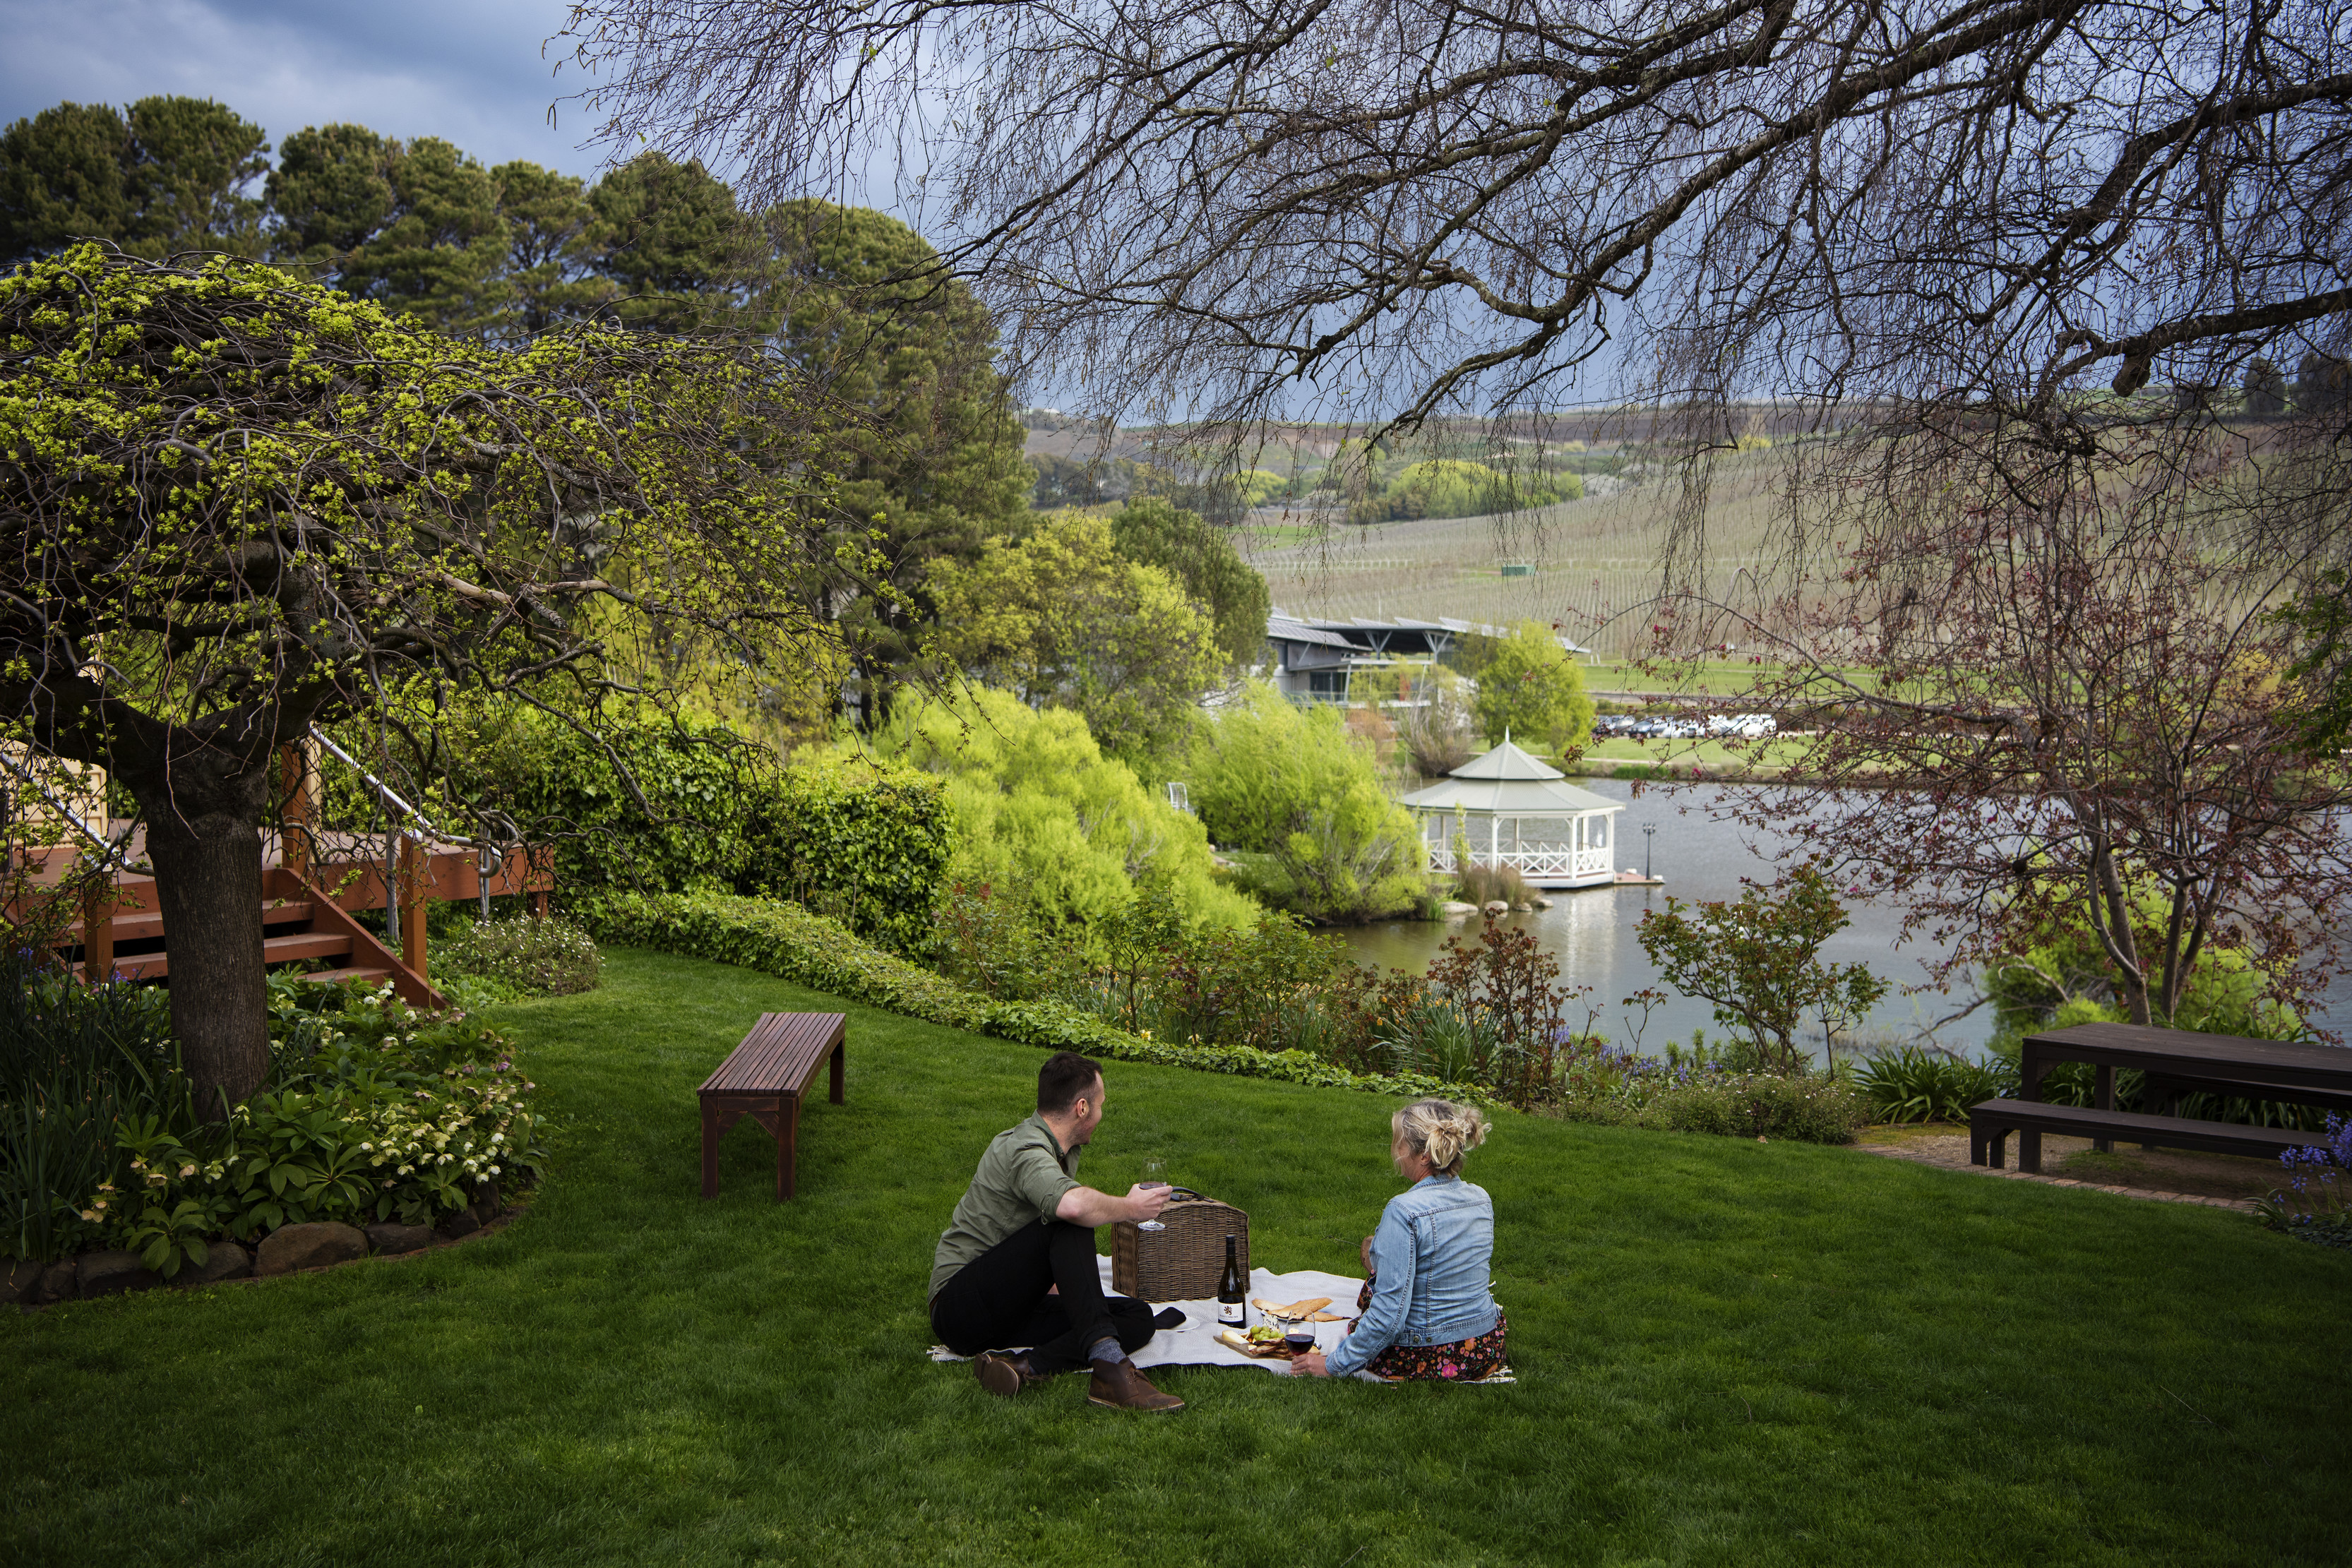 Couple having picnic under a tree amongst the lush, greenery at Picnic at Josef Chromy Tasmania.